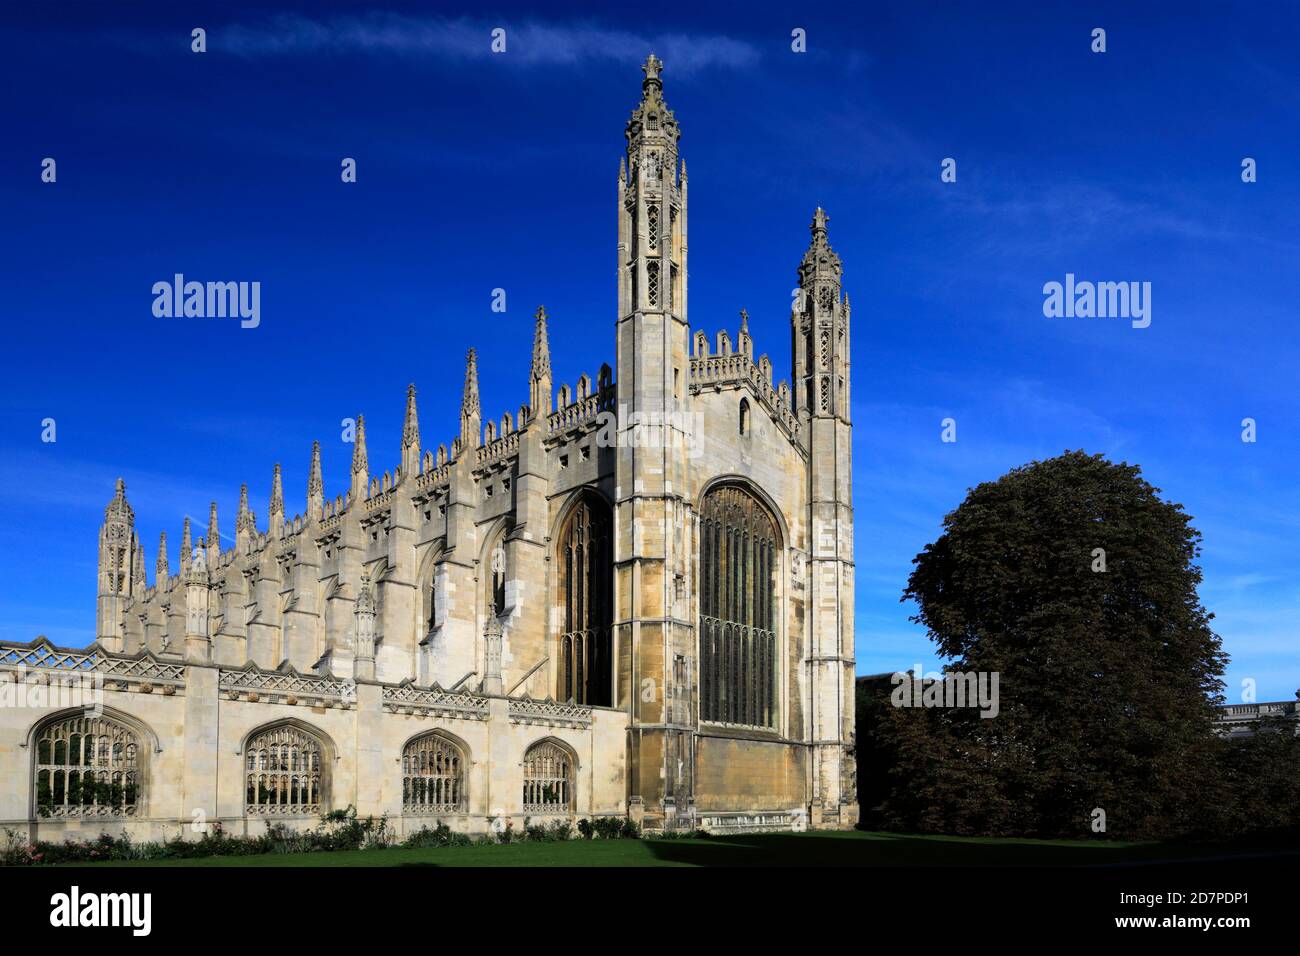 View of Kings College, Kings Parade, Cambridge City, Cambridgeshire, England, UK Stock Photo